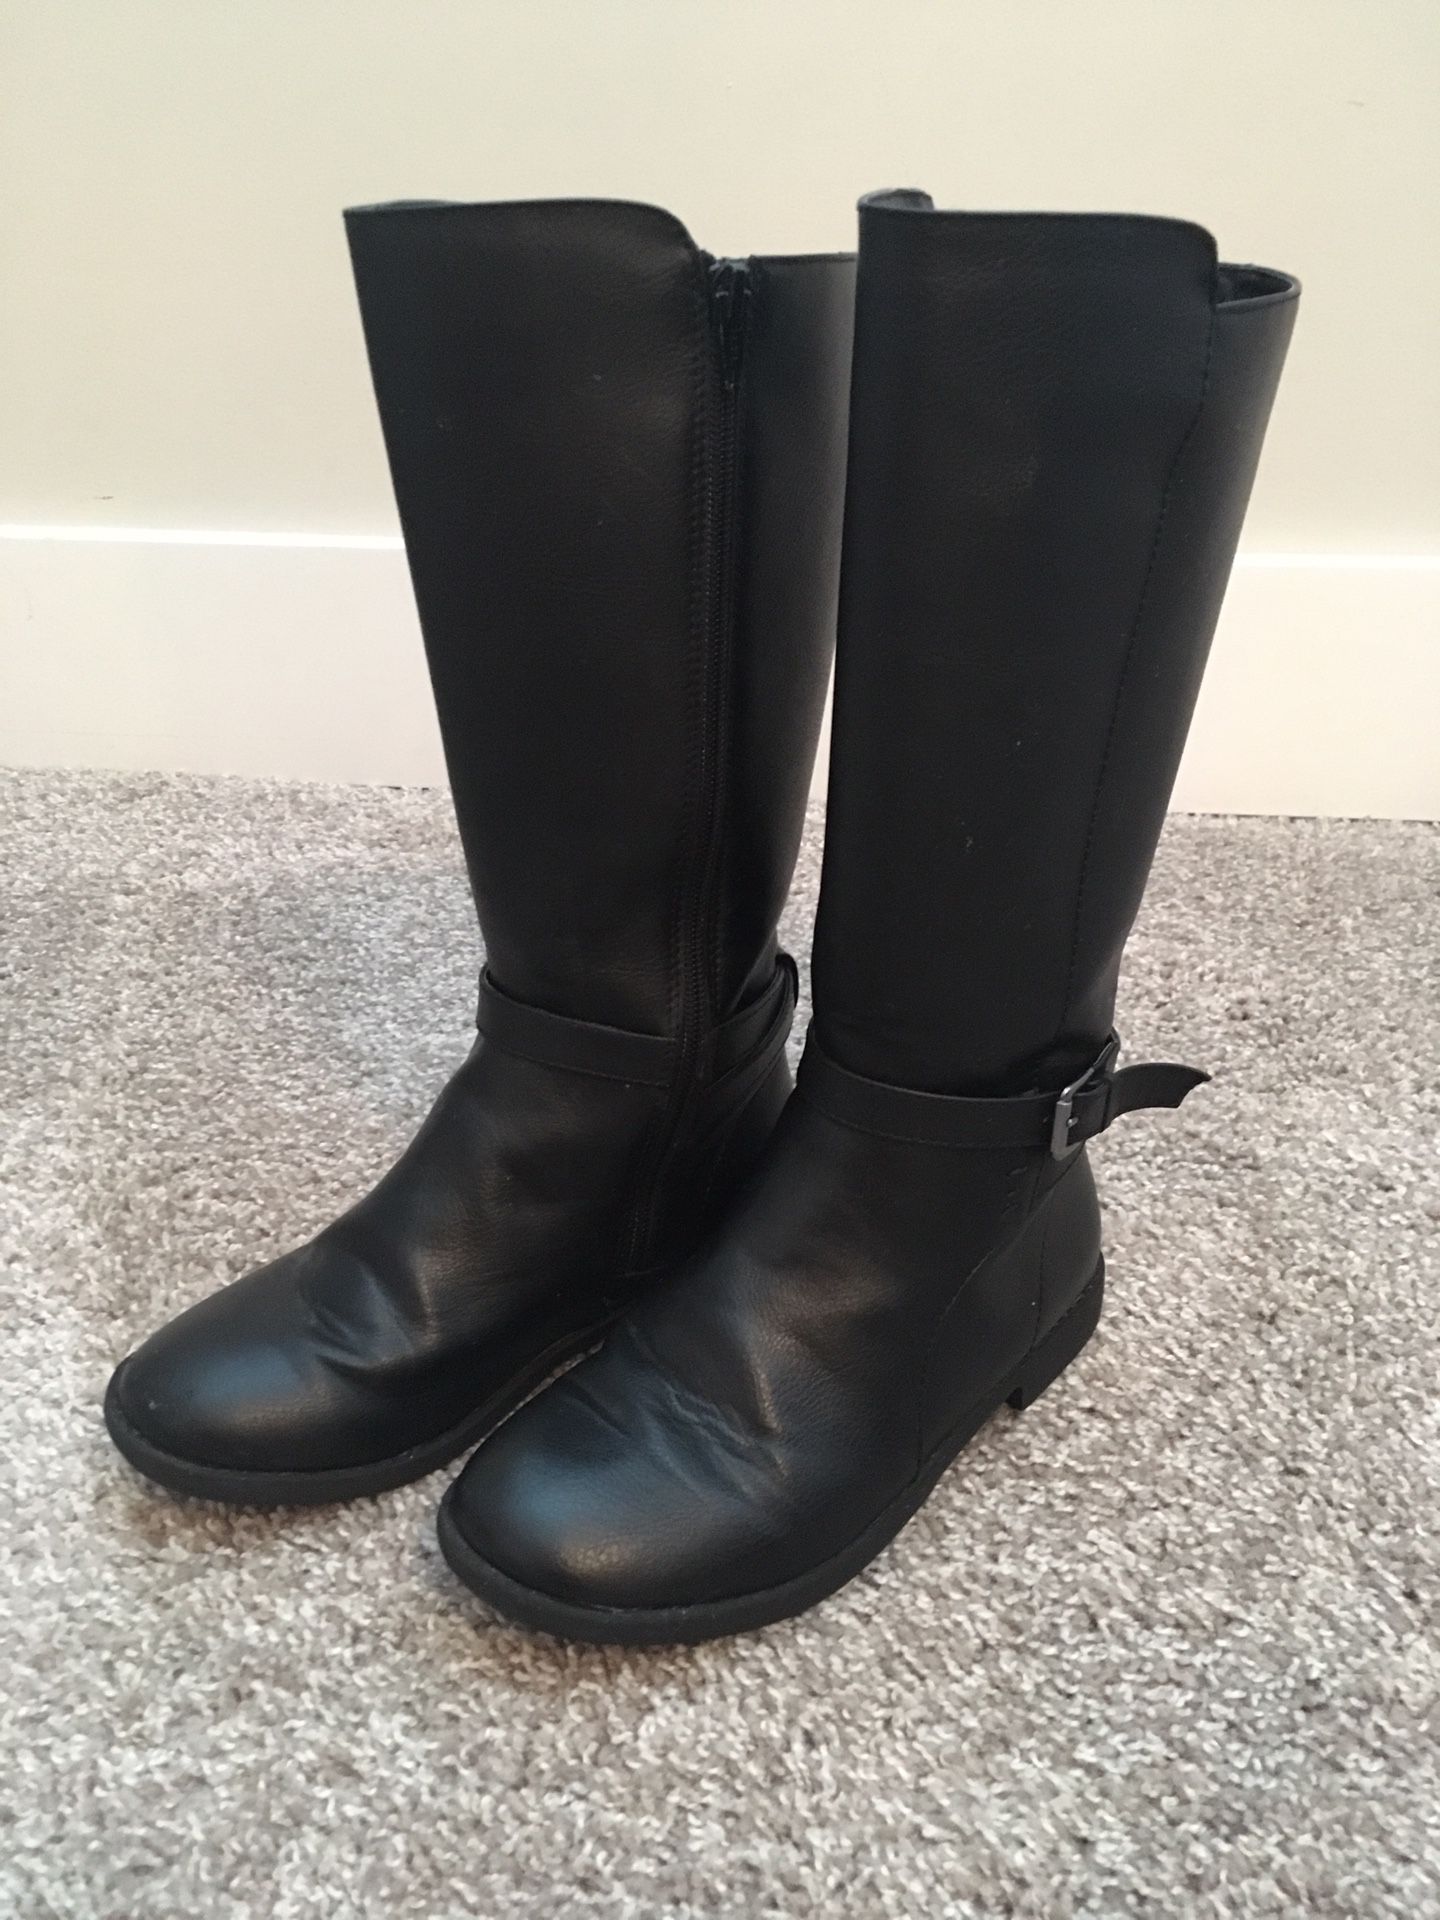 Girls pre-teen boots size 3